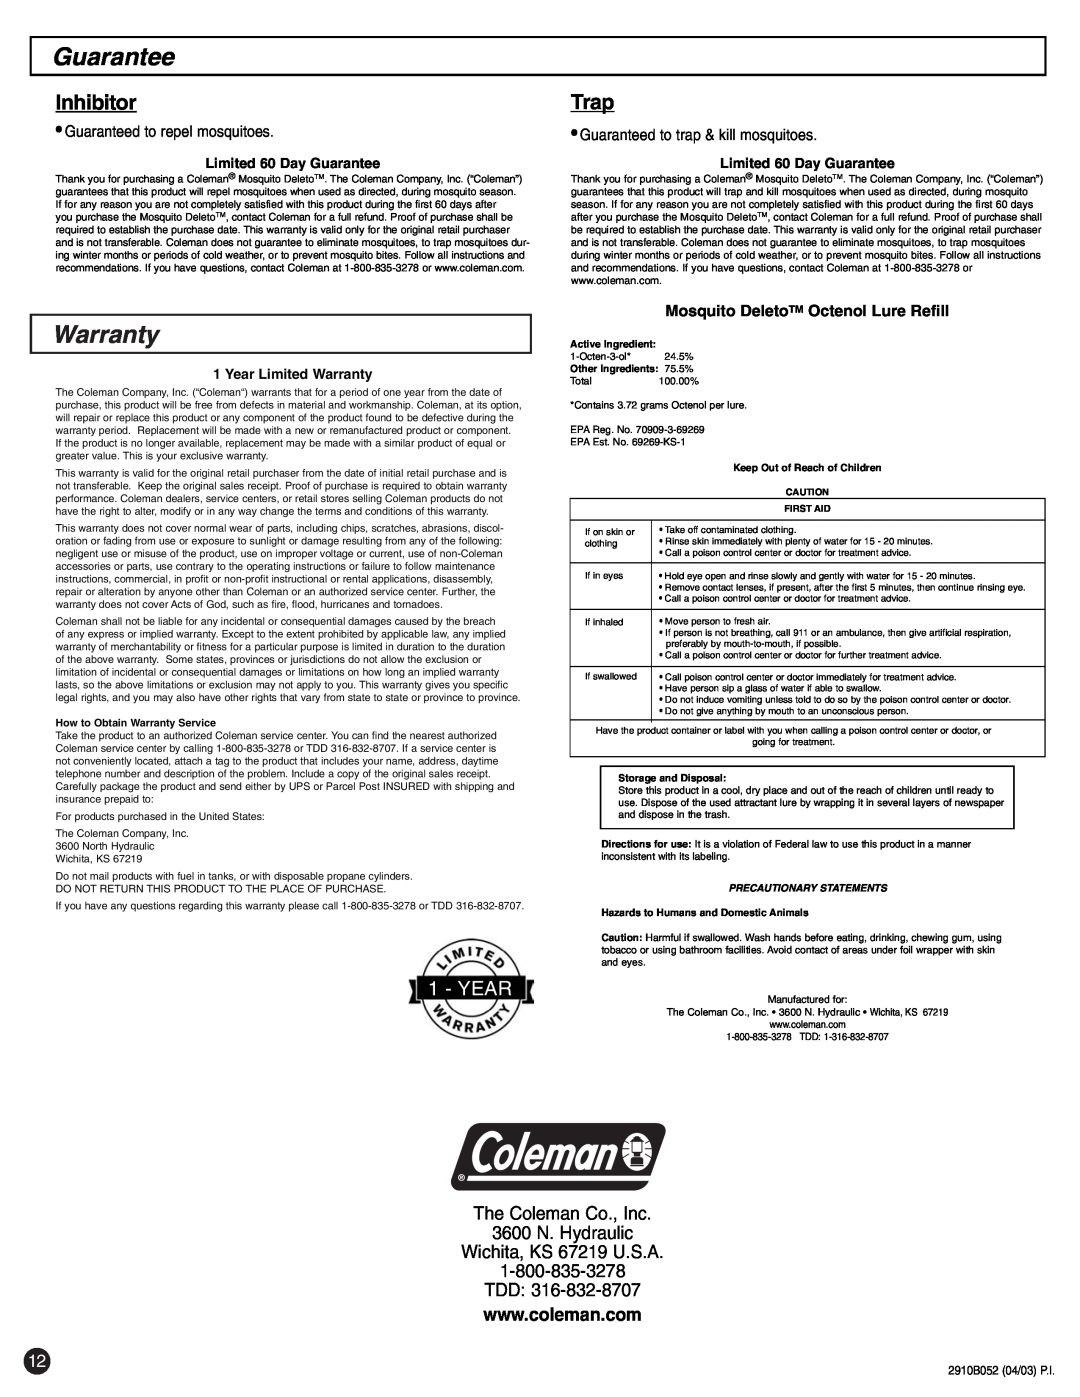 Coleman 8fa3 Guarantee, Warranty, Inhibitor, Trap, Year, The Coleman Co., Inc 3600 N. Hydraulic Wichita, KS 67219 U.S.A 